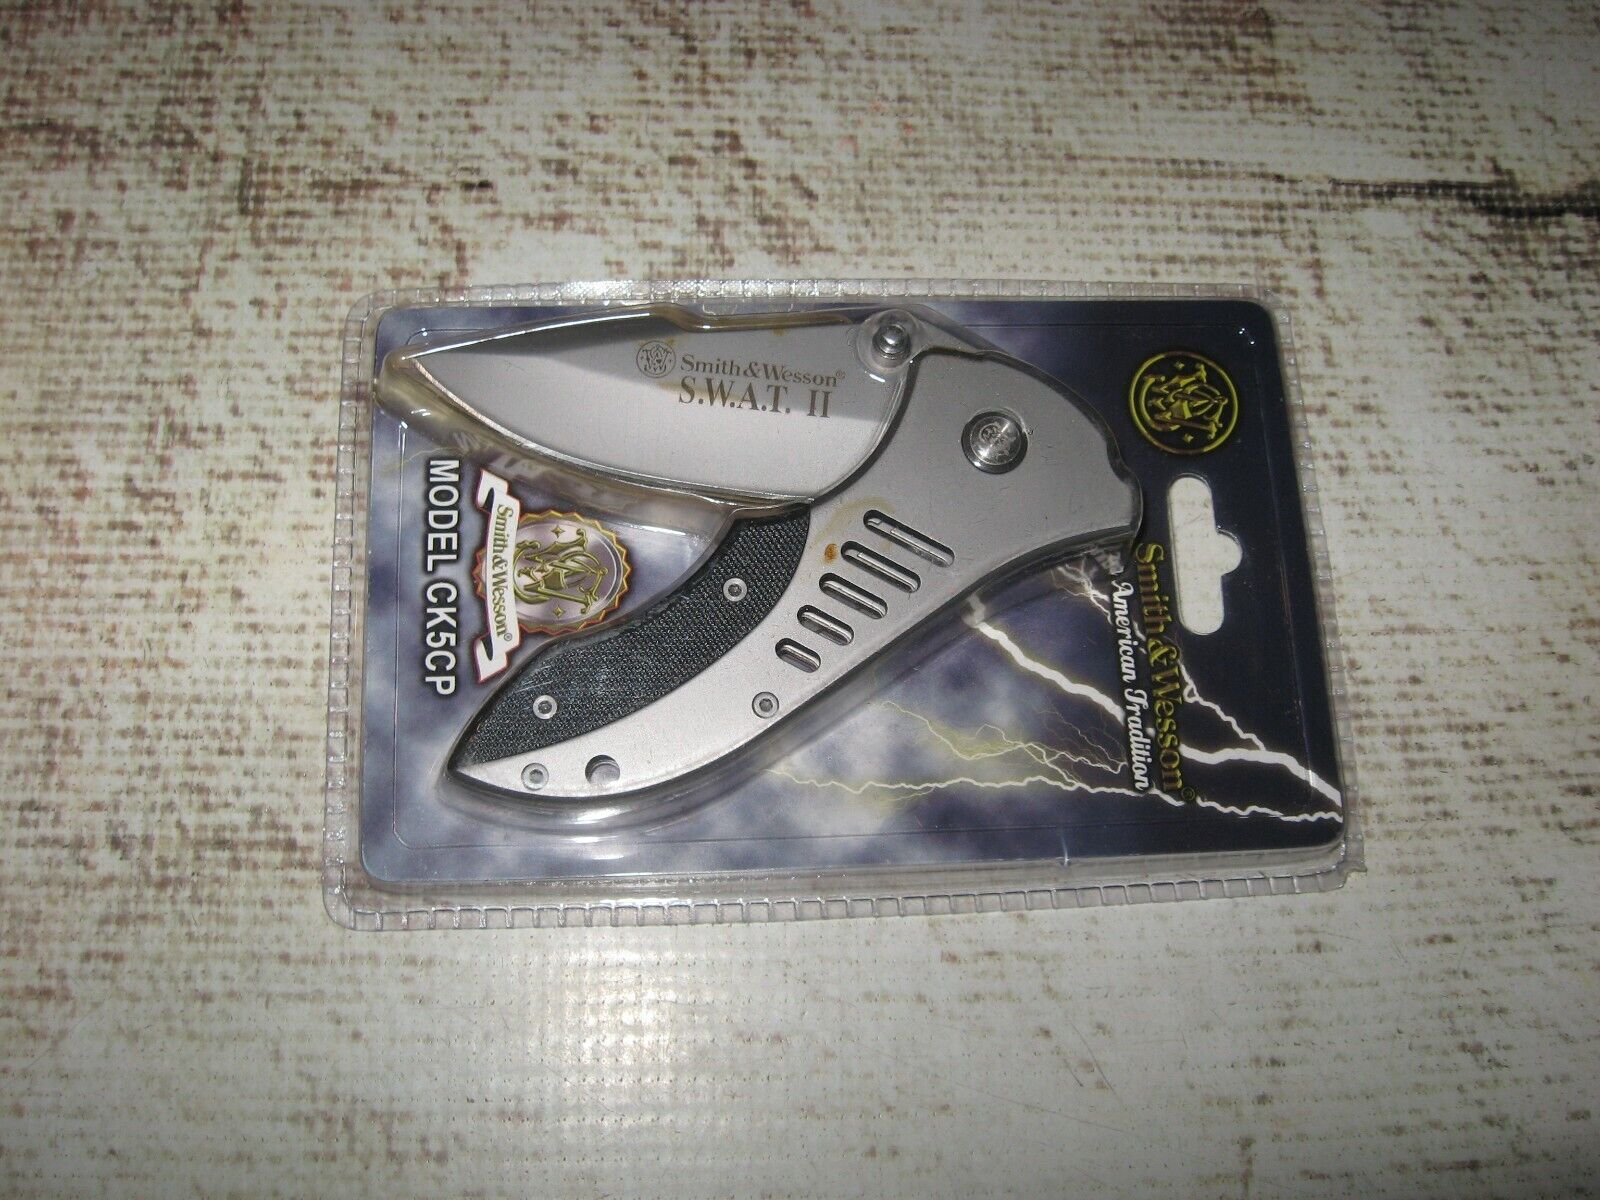 Smith & Wesson ® SWAT II Folding Pocket Knife (1) CK5CP 